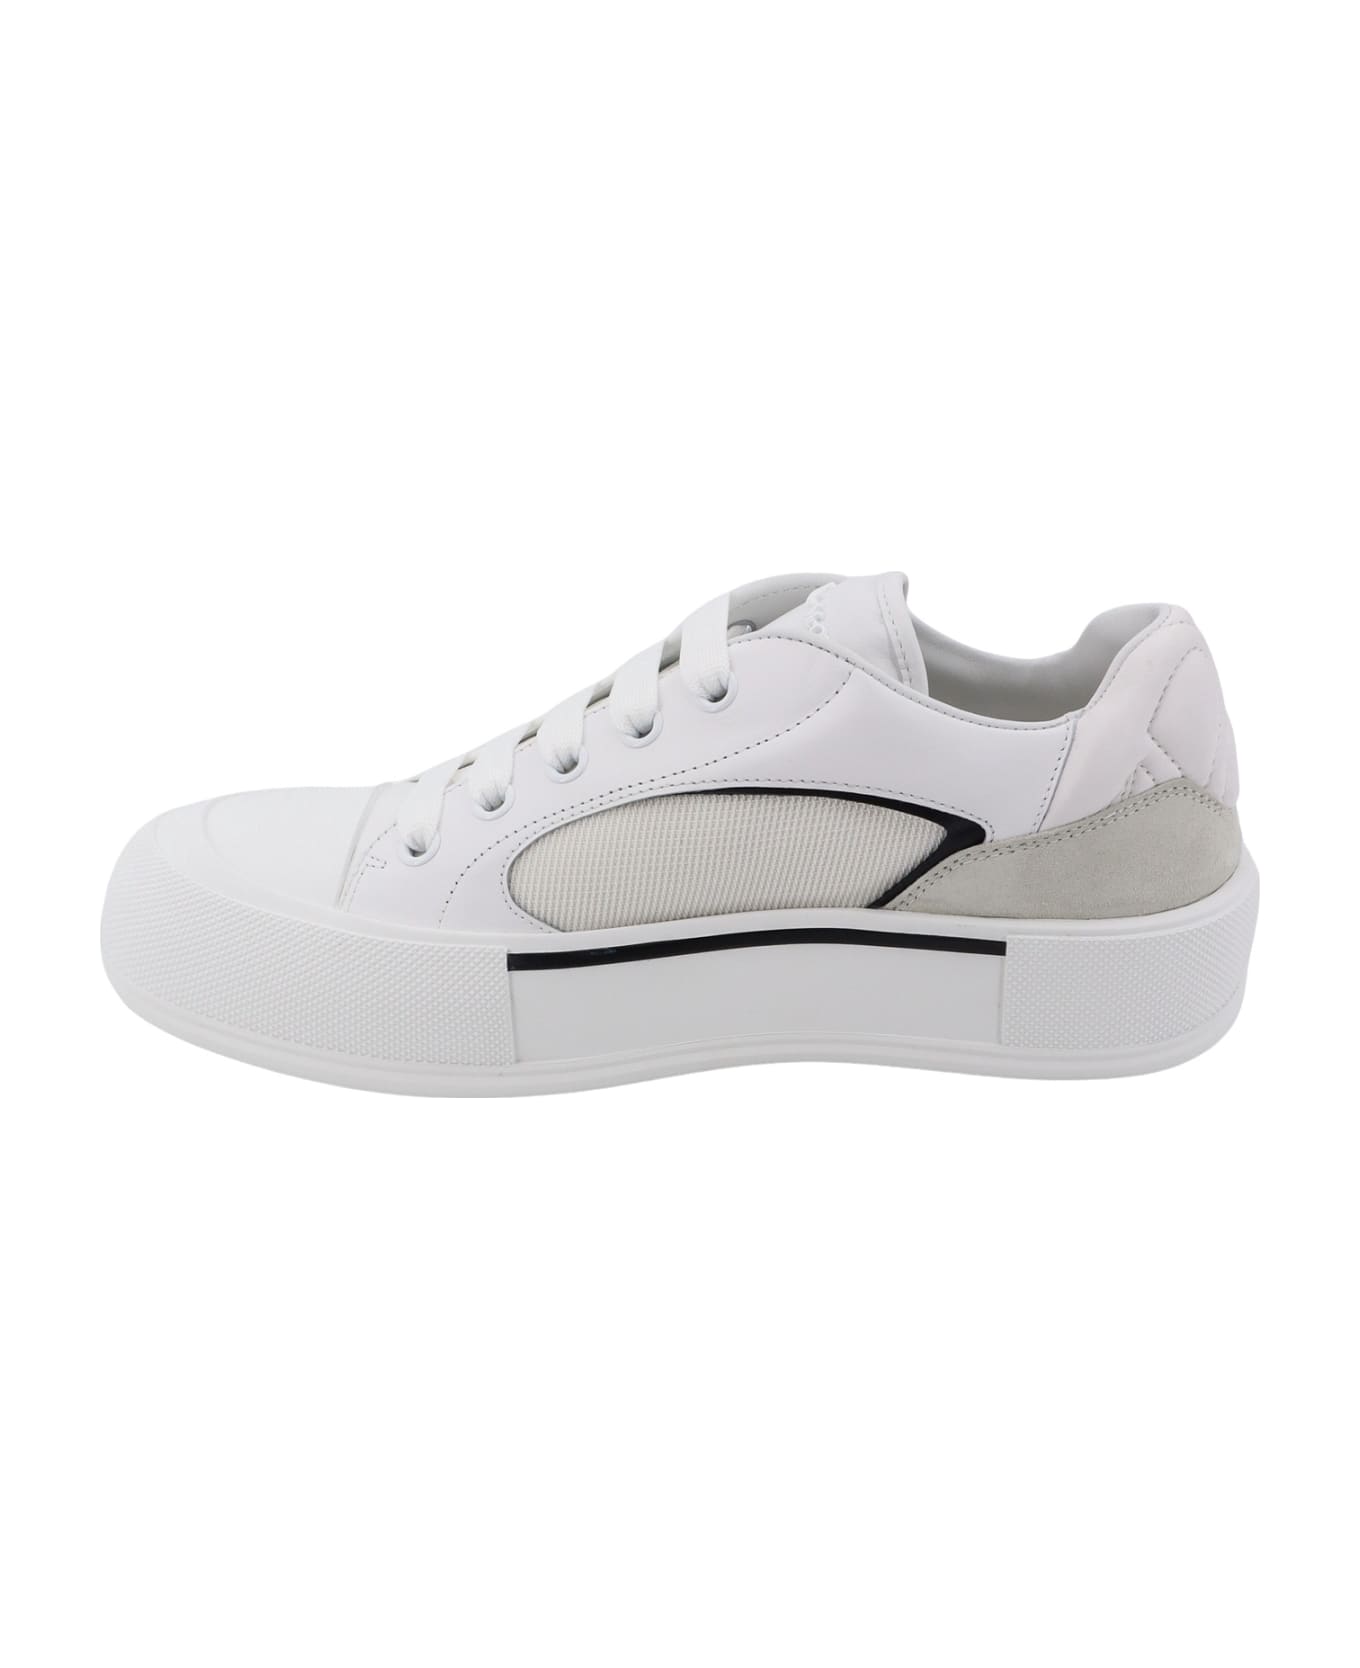 Alexander McQueen Deck Plimsoll Sneakers - White